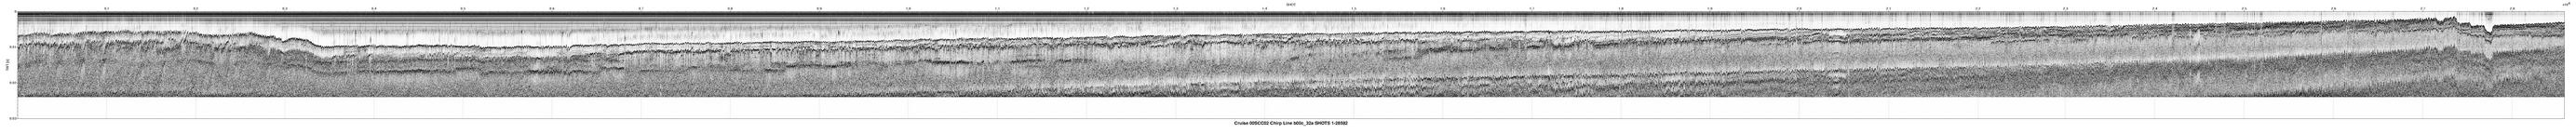 00SCC02 b00c_32a seismic profile image